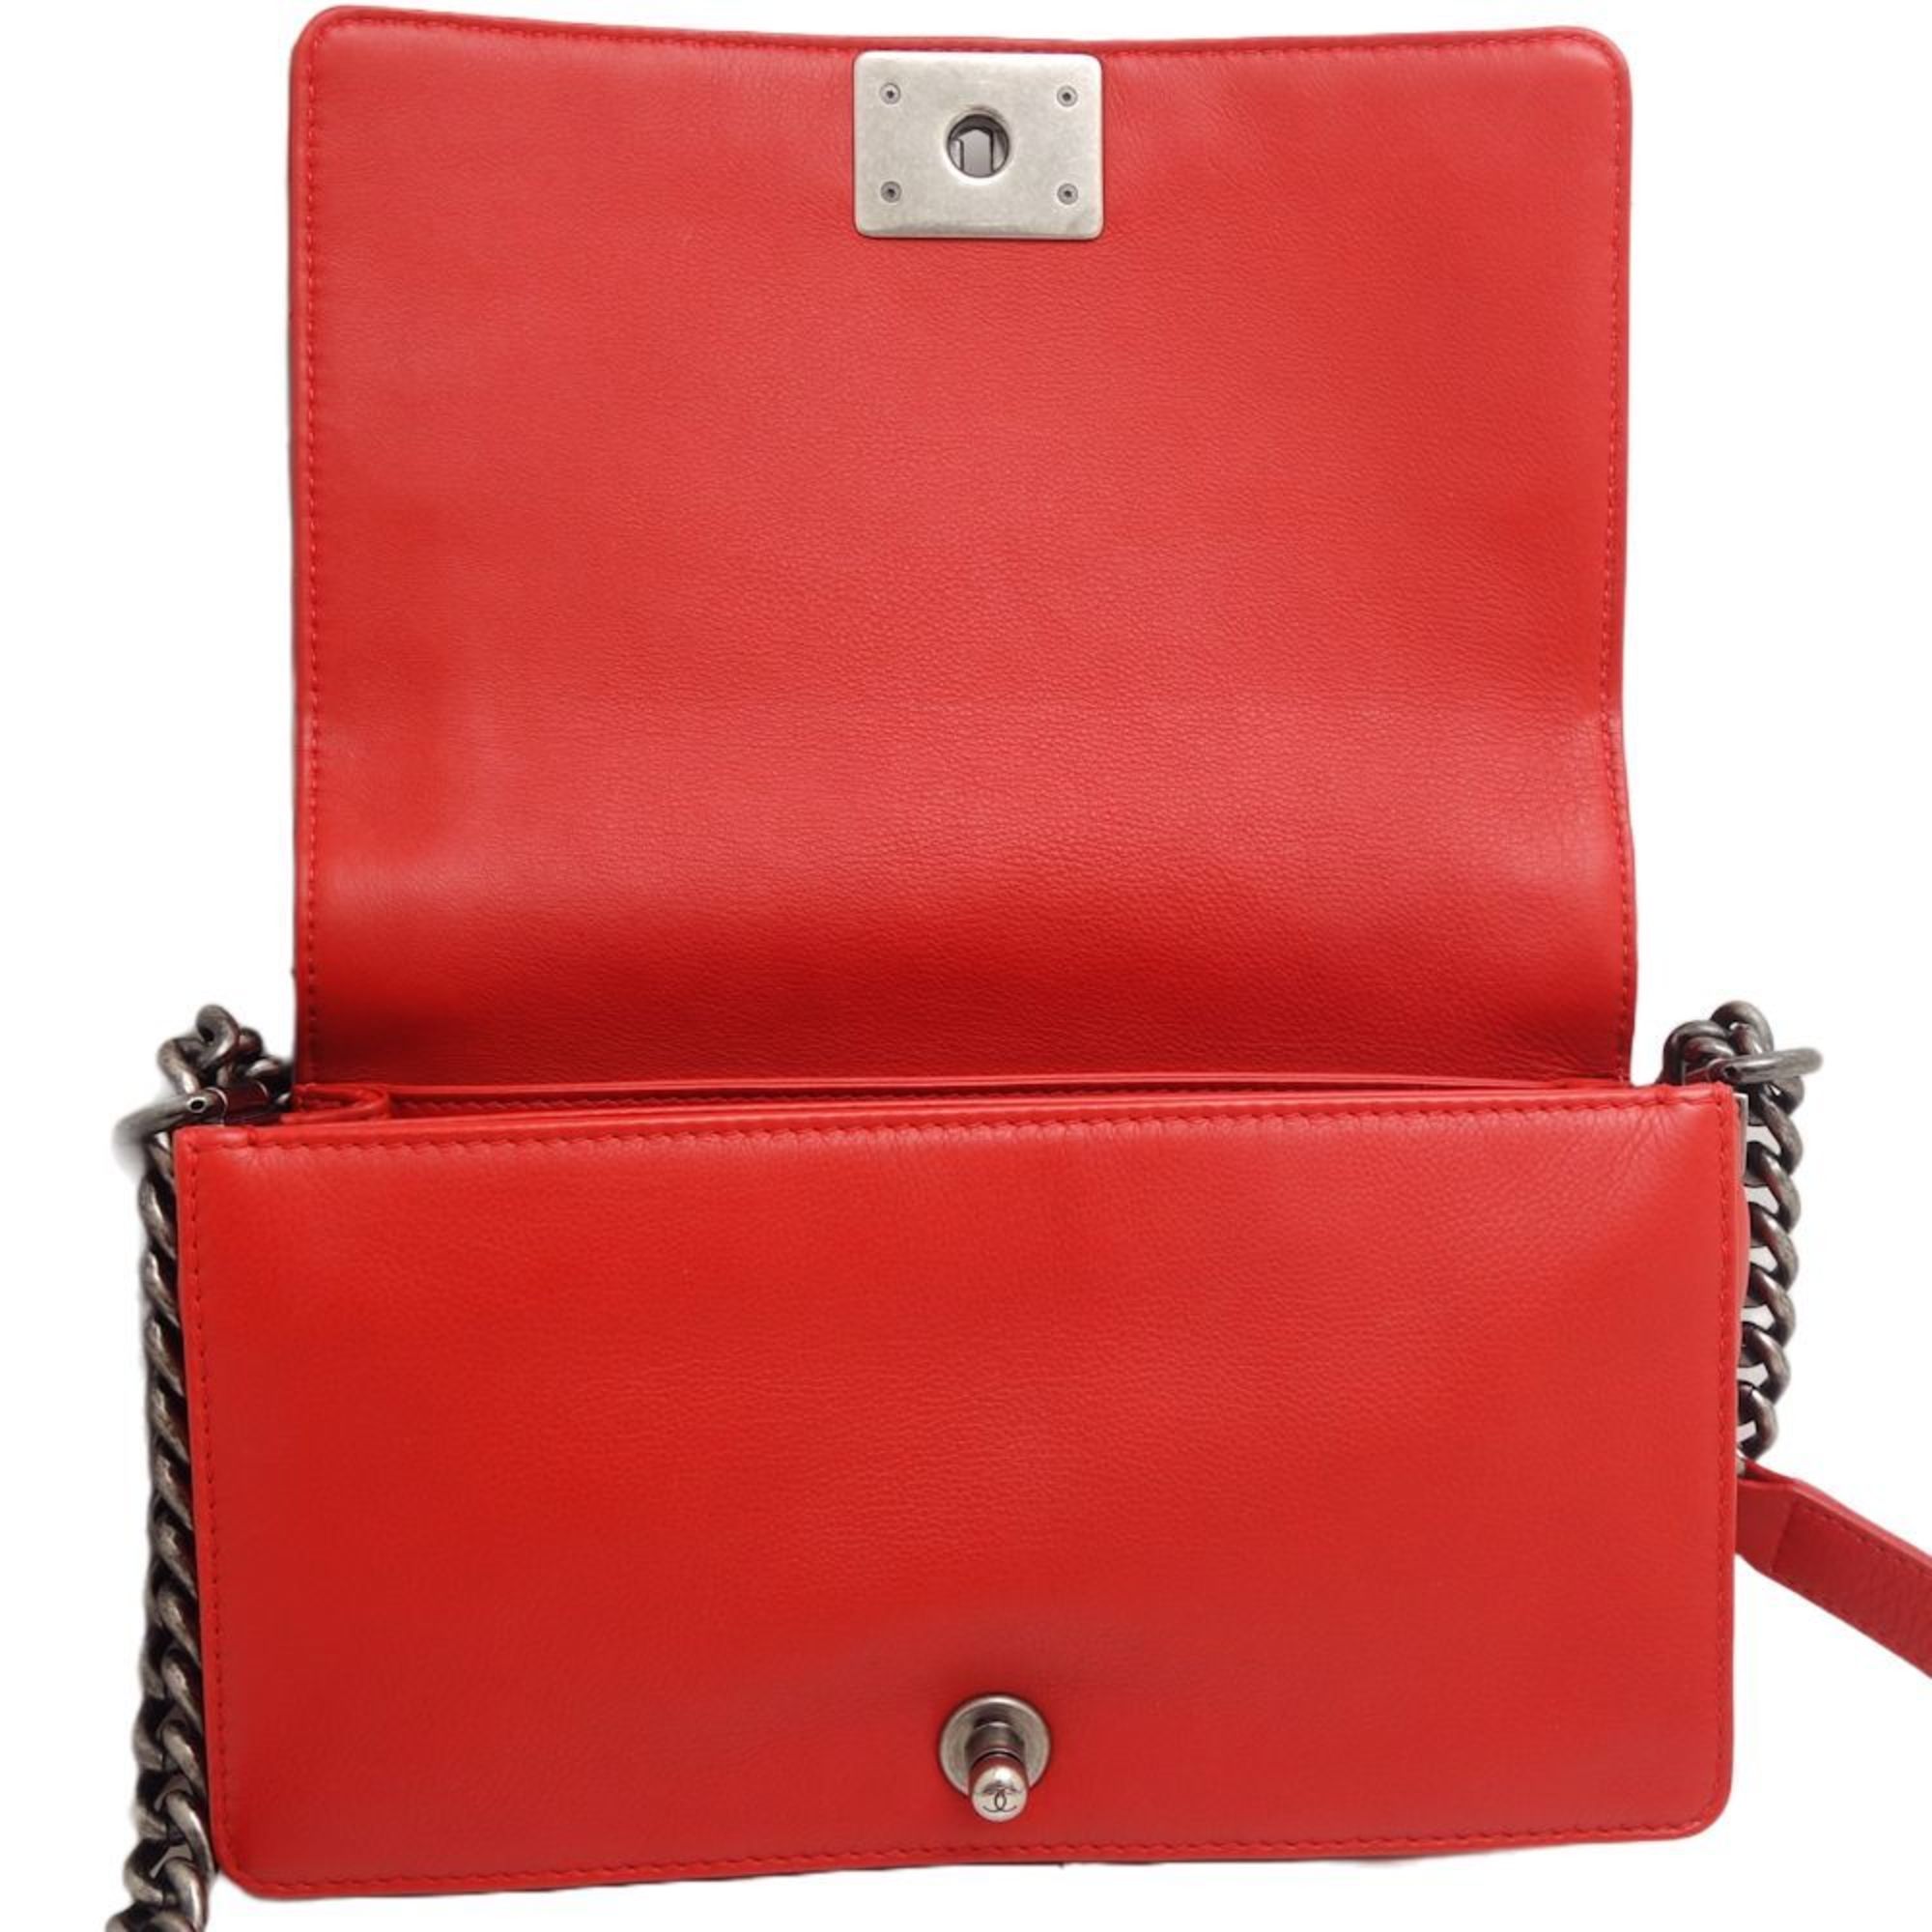 CHANEL Boy Chanel Chain Shoulder Crossbody Bag Lambskin Red 450070